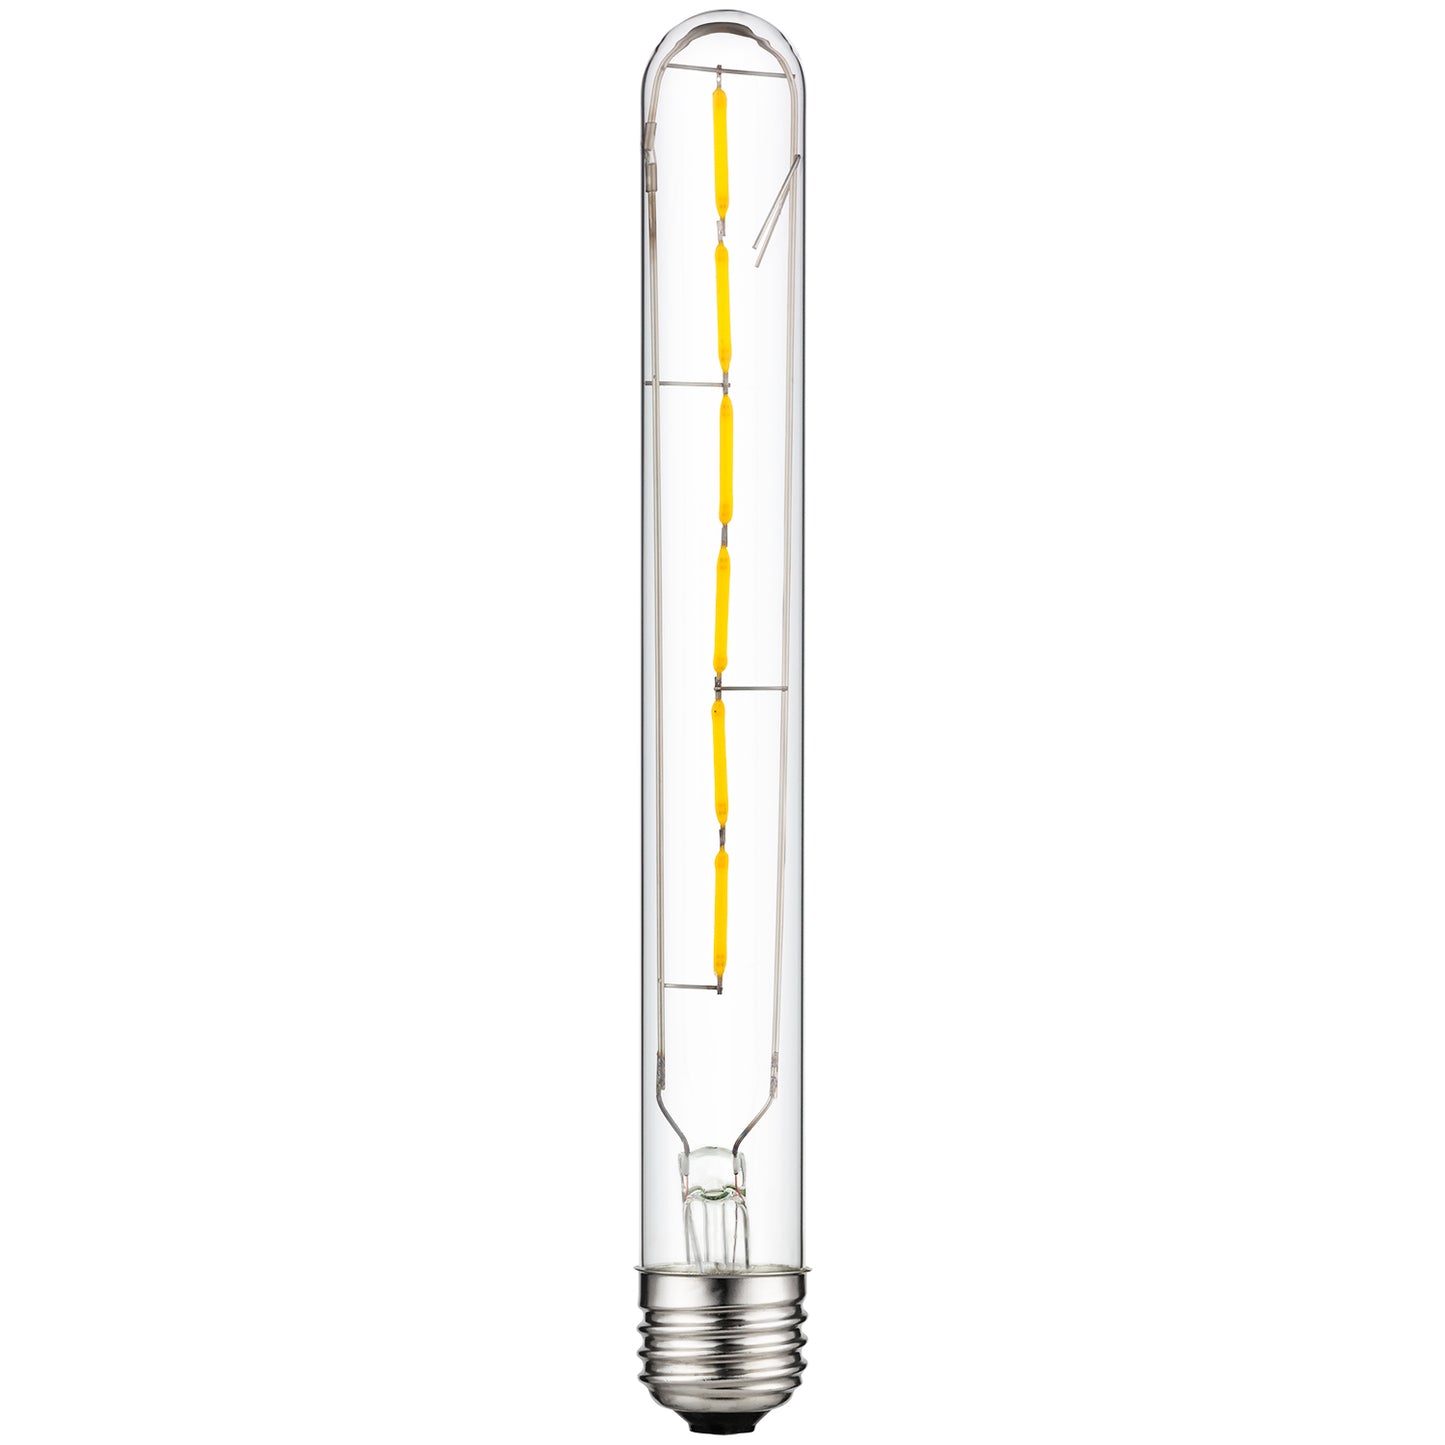 Sunlite LED Filament T8 Tubular Light Bulb, 5 Watts (40W Equivalent), 430 Lumens, Medium E26 Base, Dimmable, 214 mm, UL Listed, 2200K Amber, 6 Count